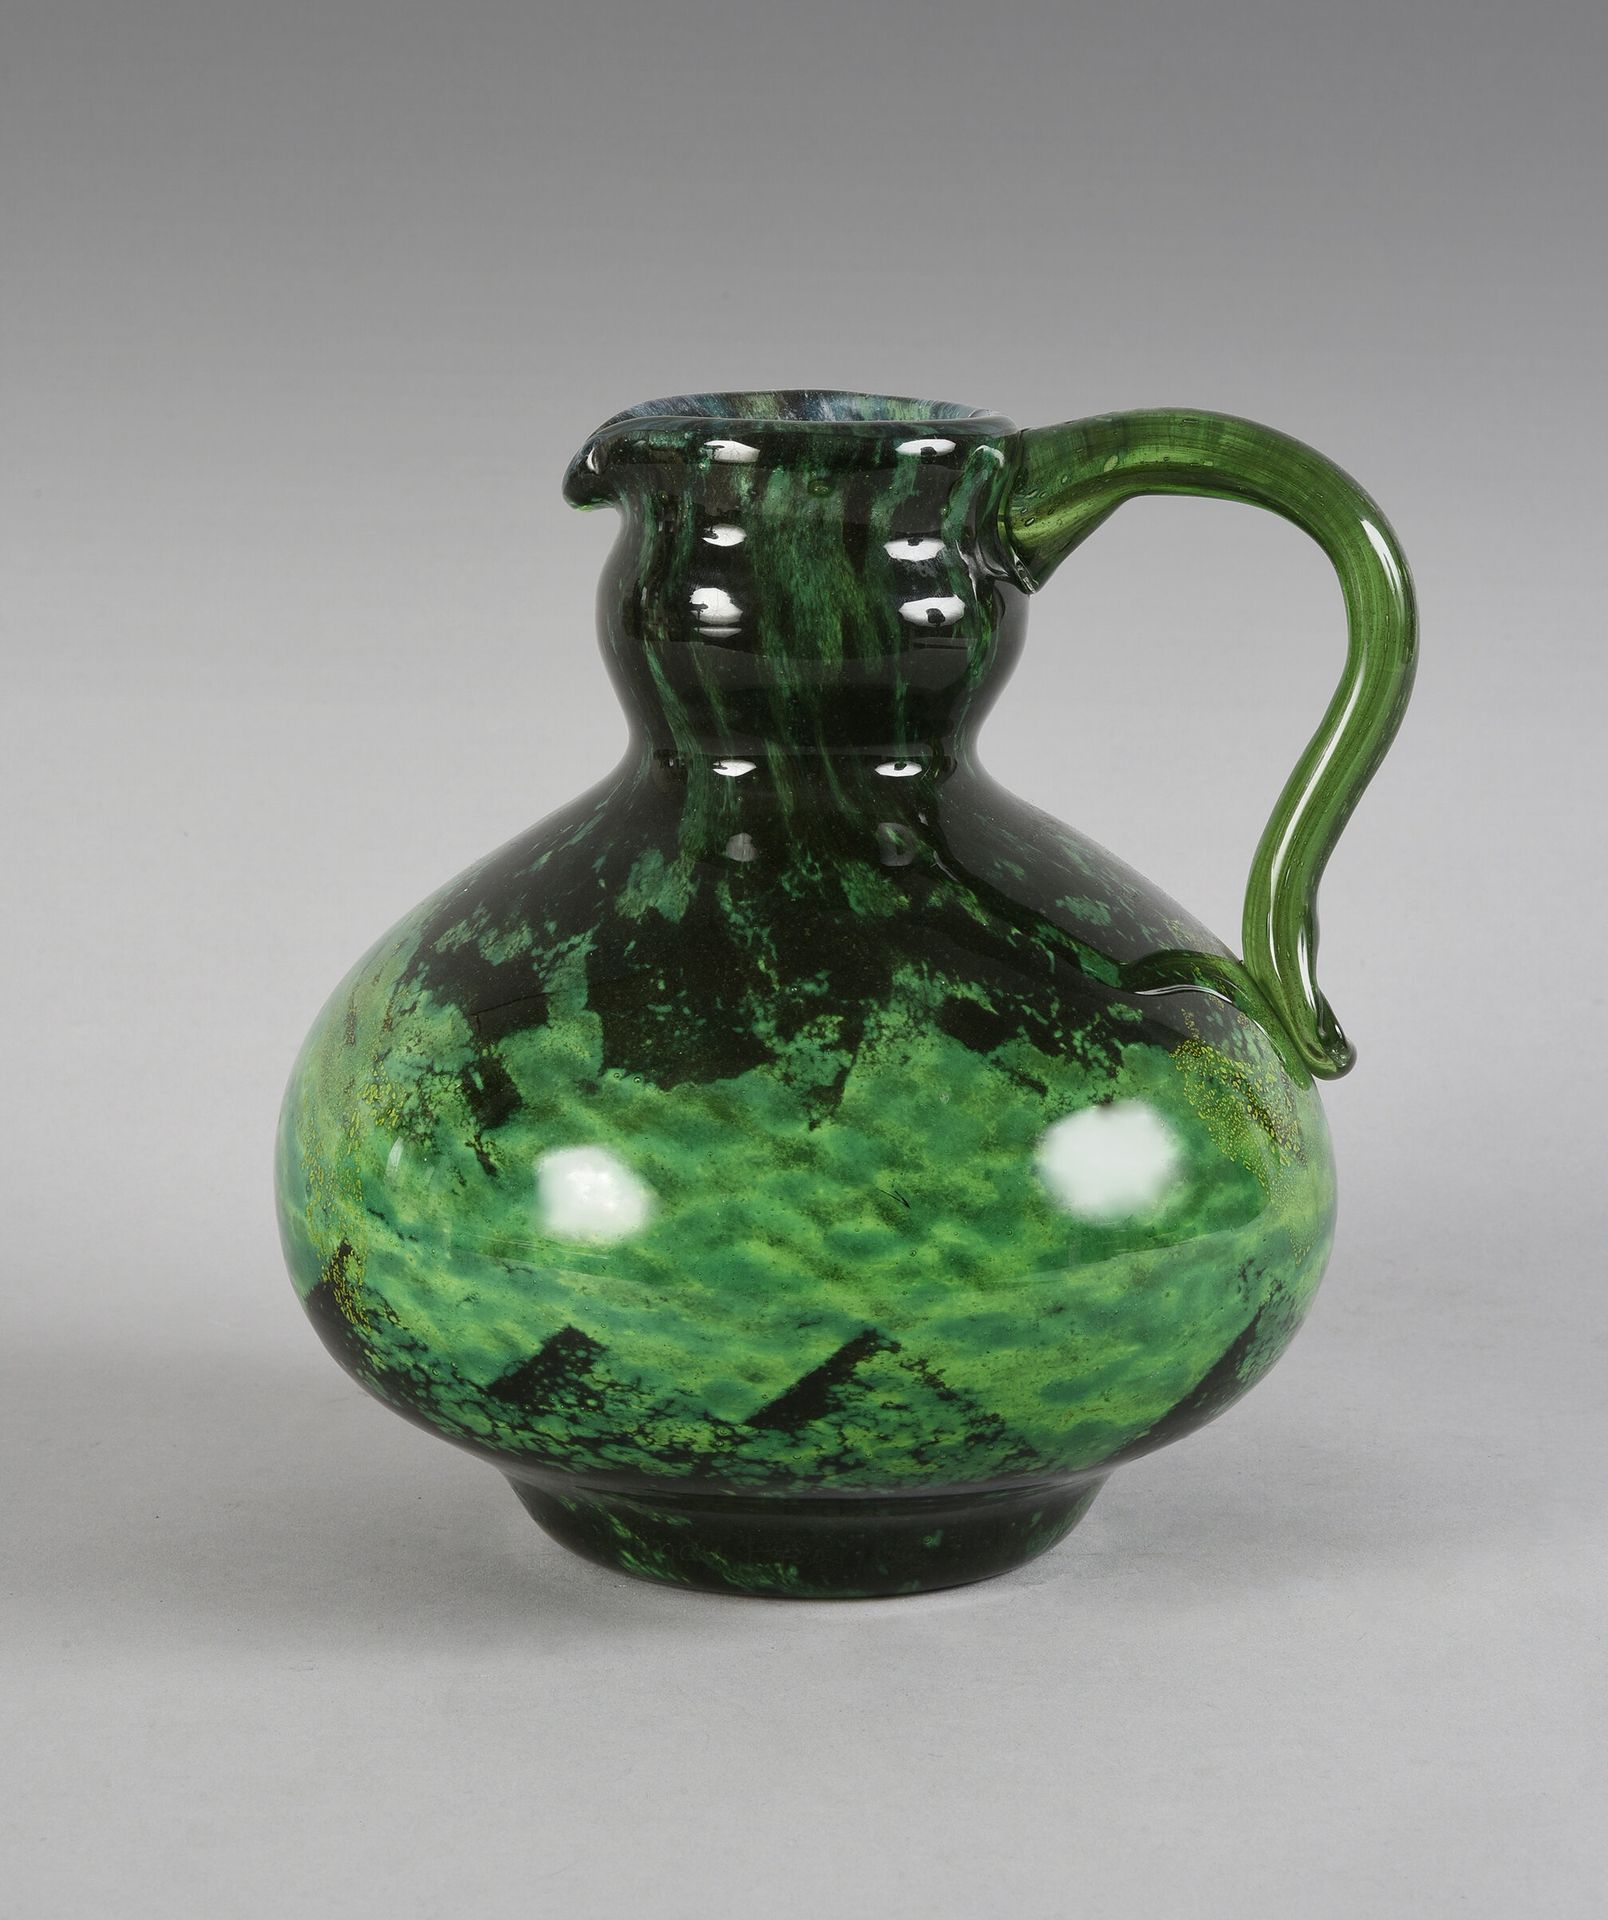 DAUM Nancy 
大理石绿色吹制玻璃罐，内有金叶。
约1930 - 1940年。
高：23厘米。